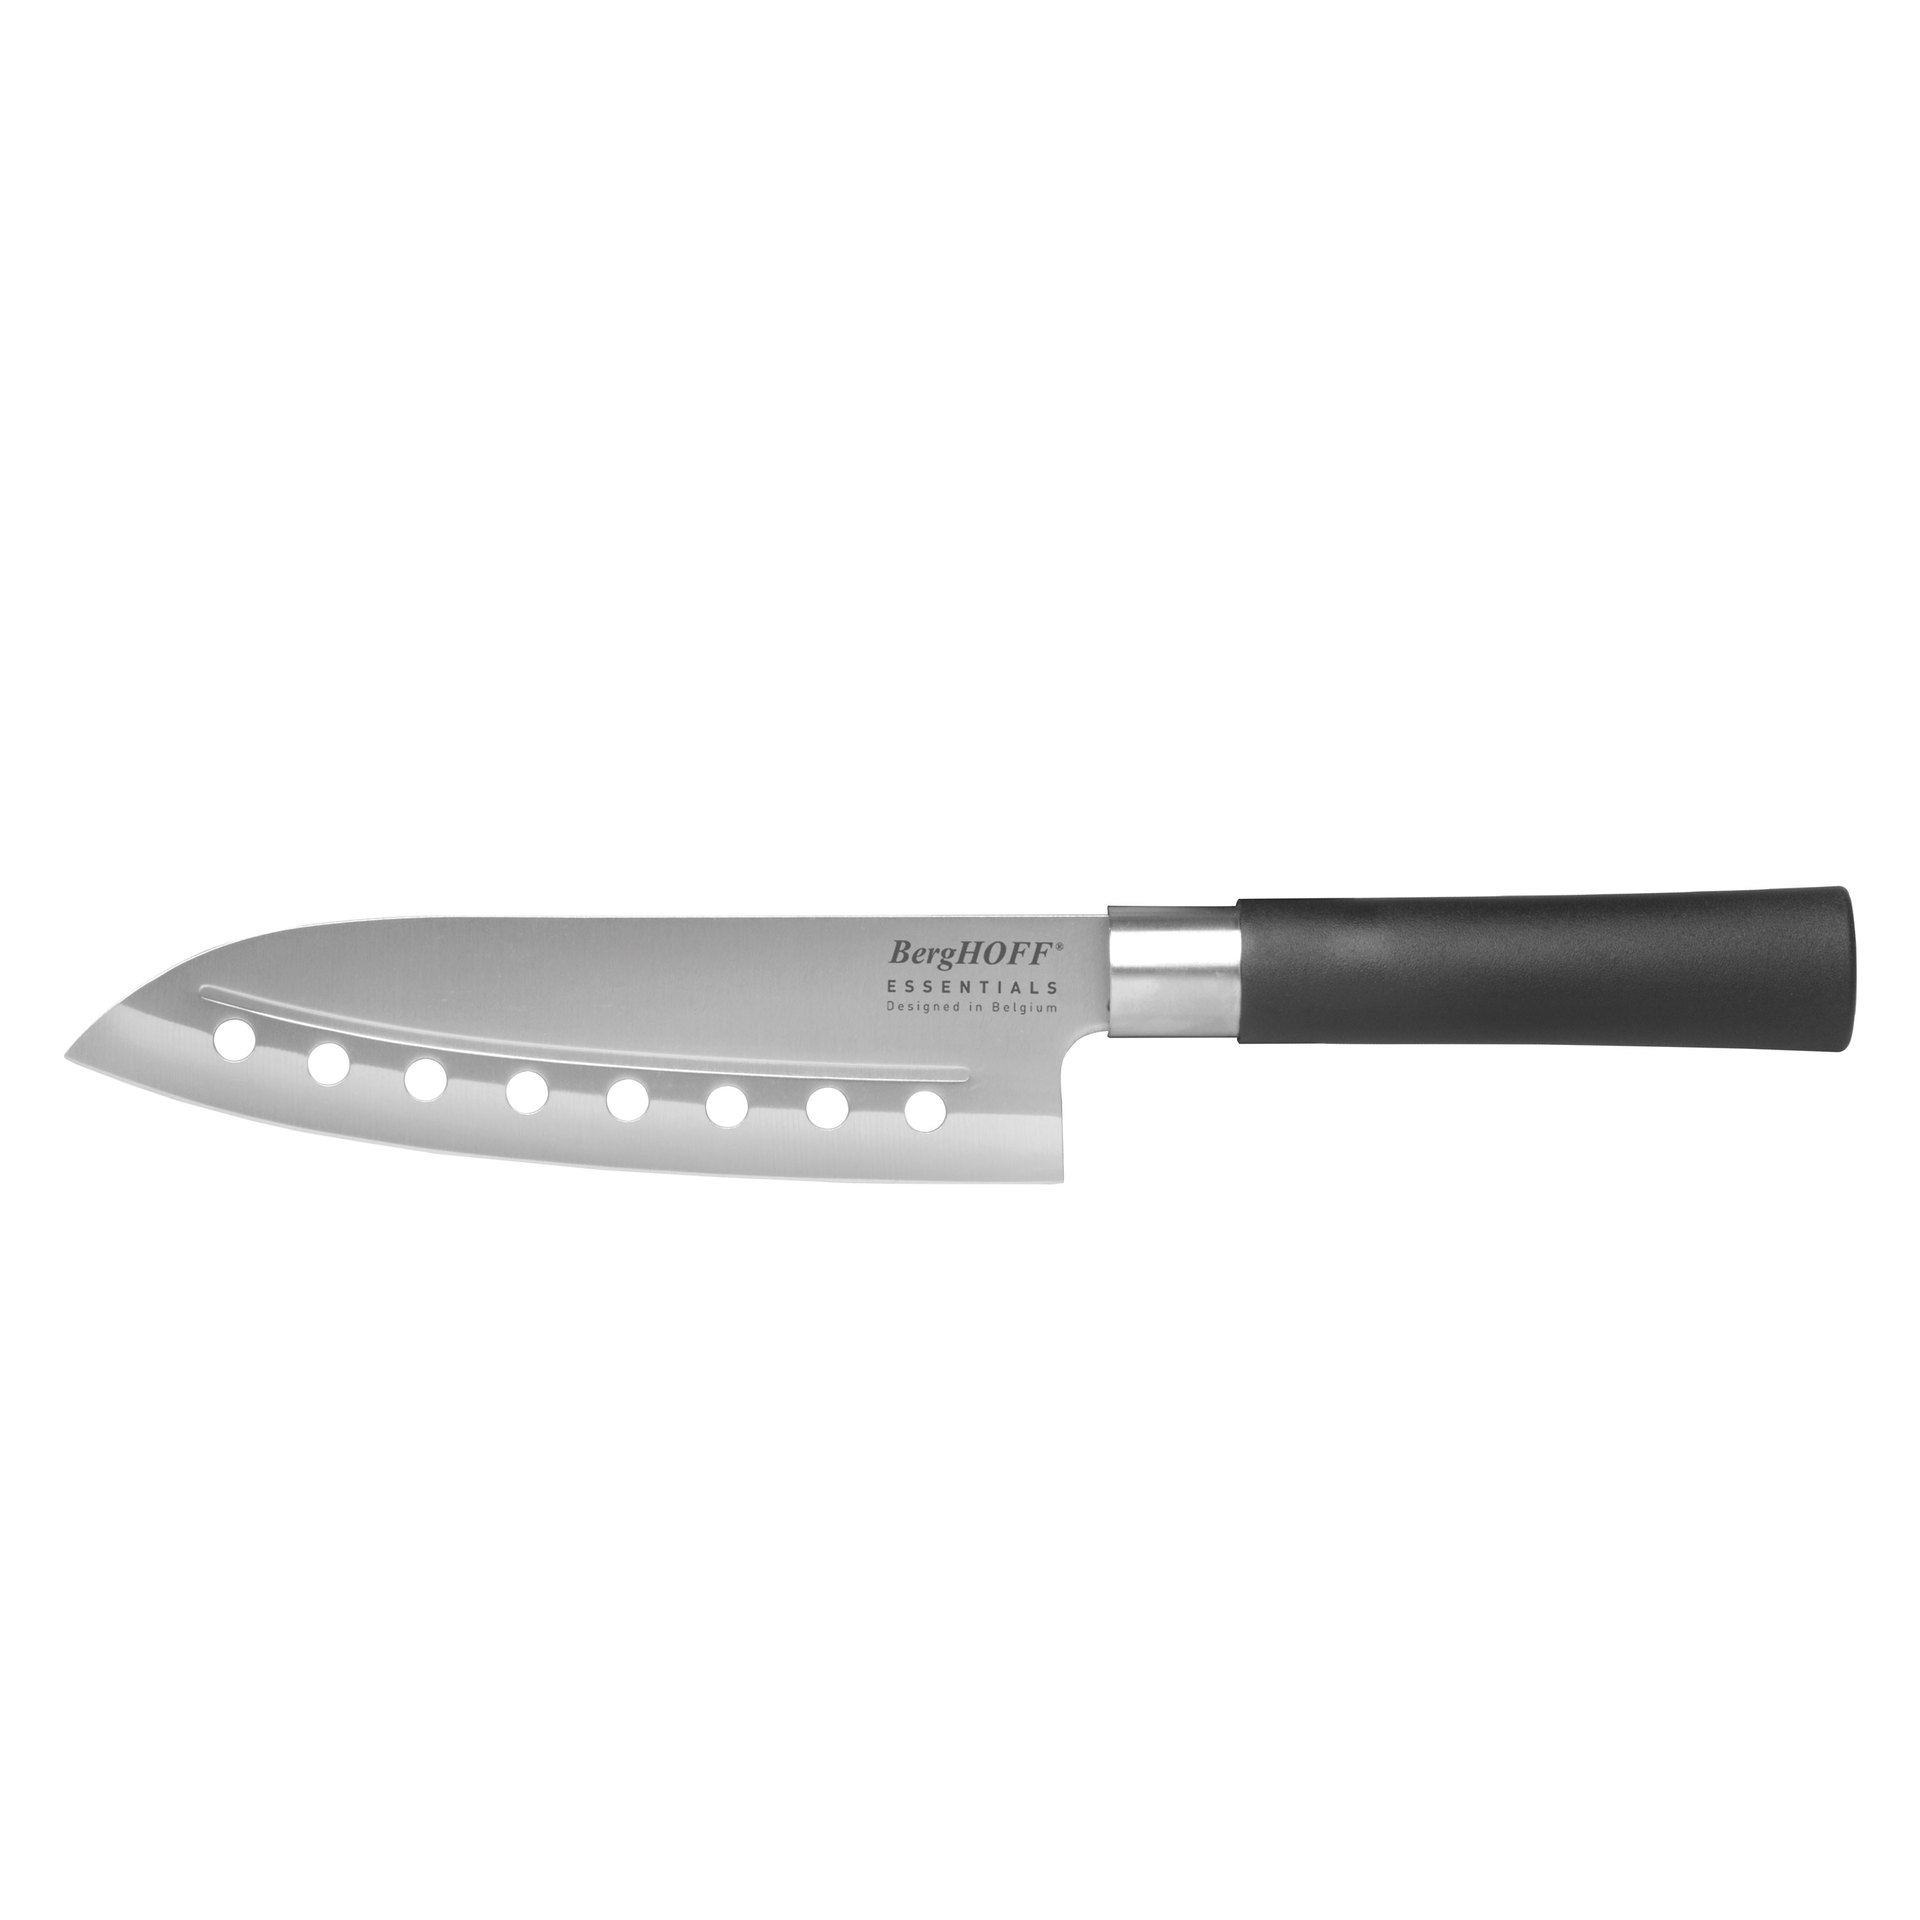 Нож сантоку BergHOFF Essentials с отверстиями в лезвии 18см